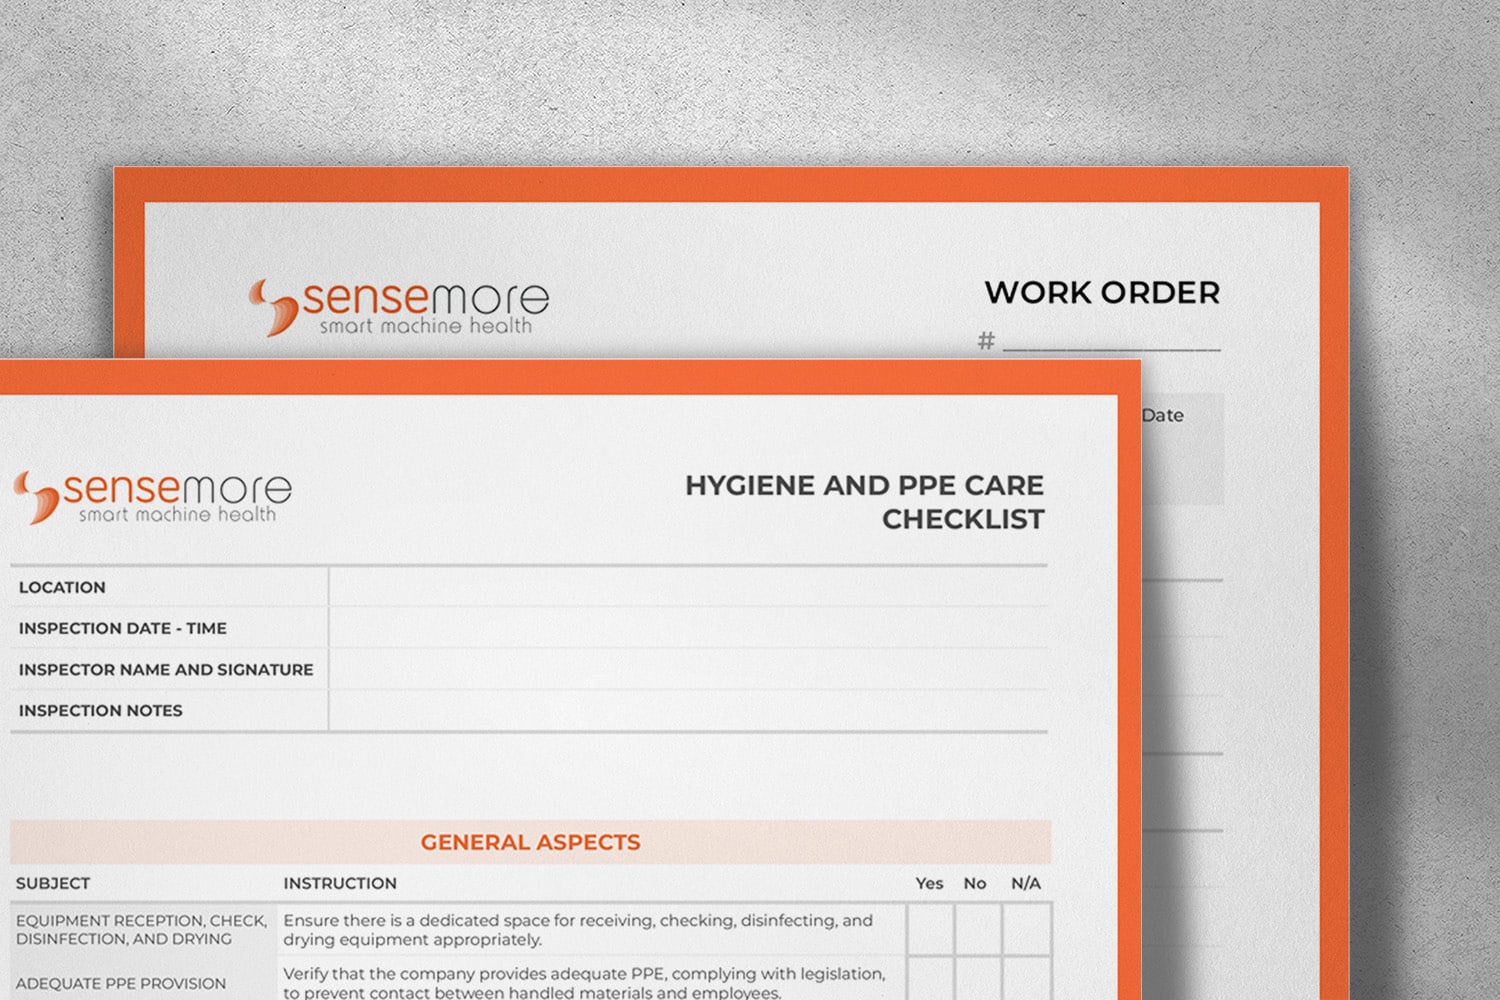 Sensemore Checklist Hygiene and PPE Care